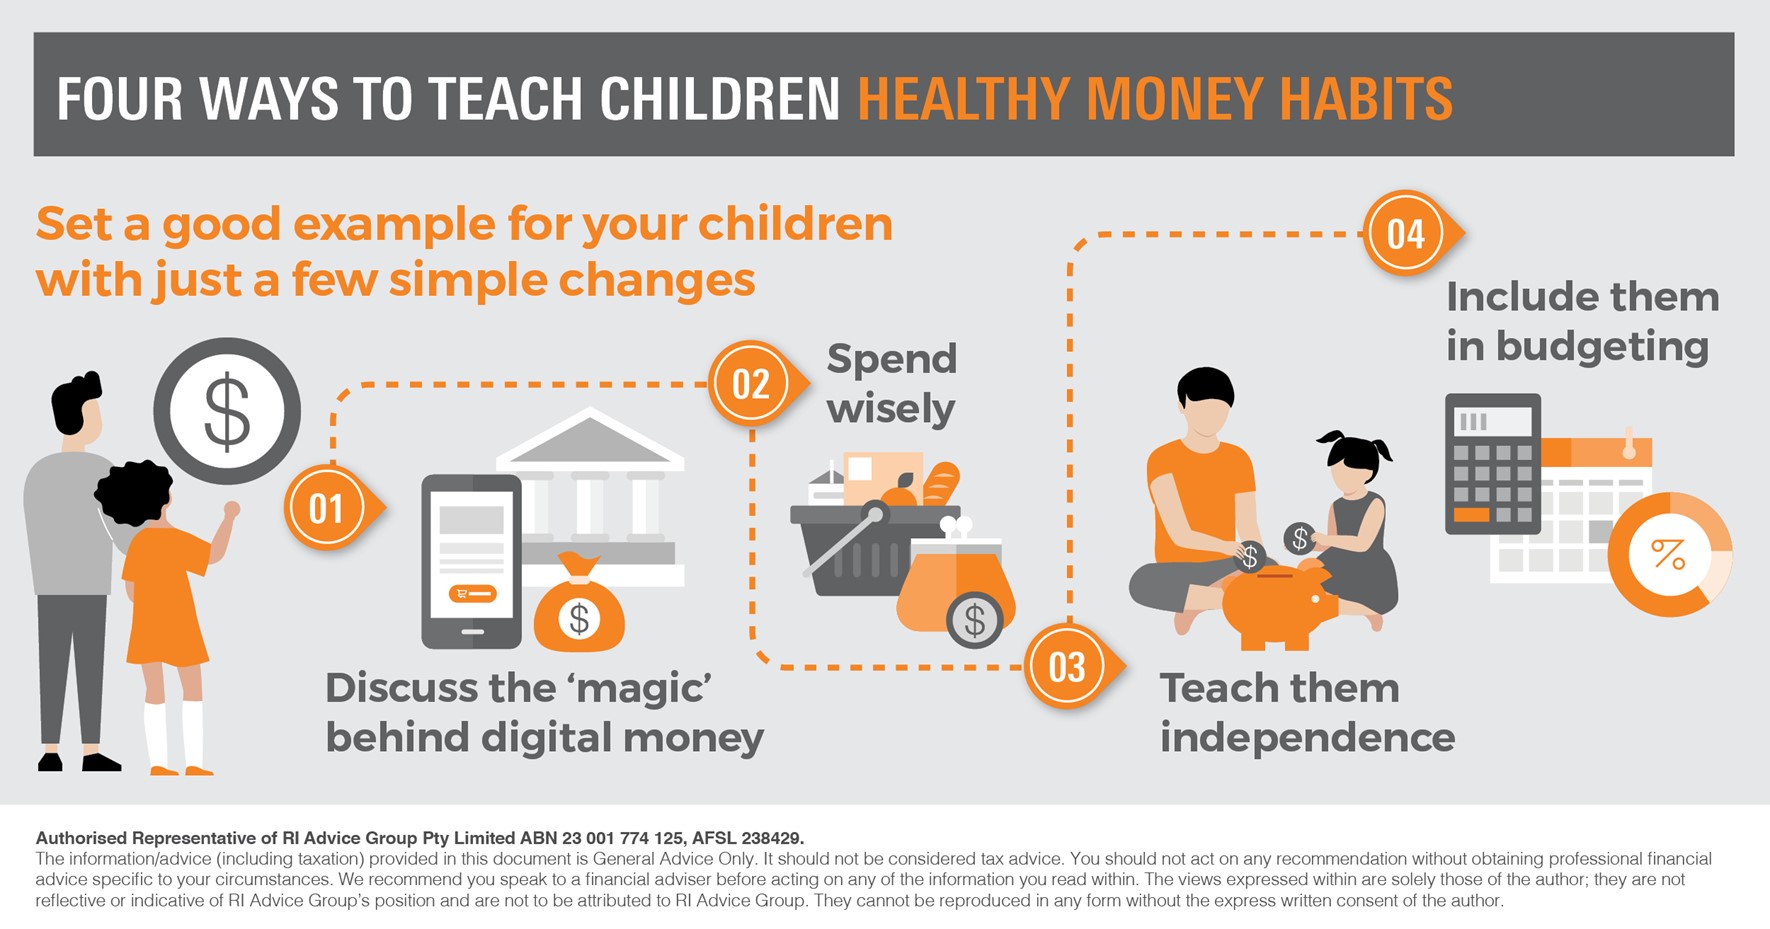 Four ways to teach children healthy money habits infographic